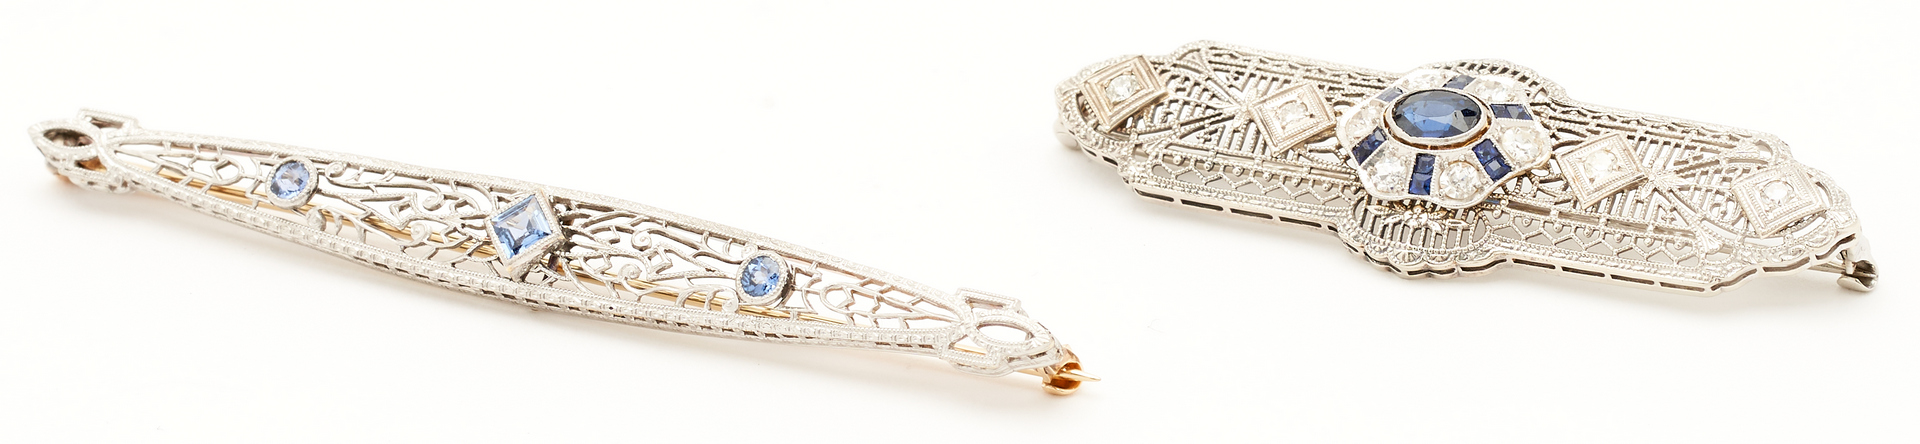 Lot 1116: 2 Art Deco Sapphire & Diamond Brooches